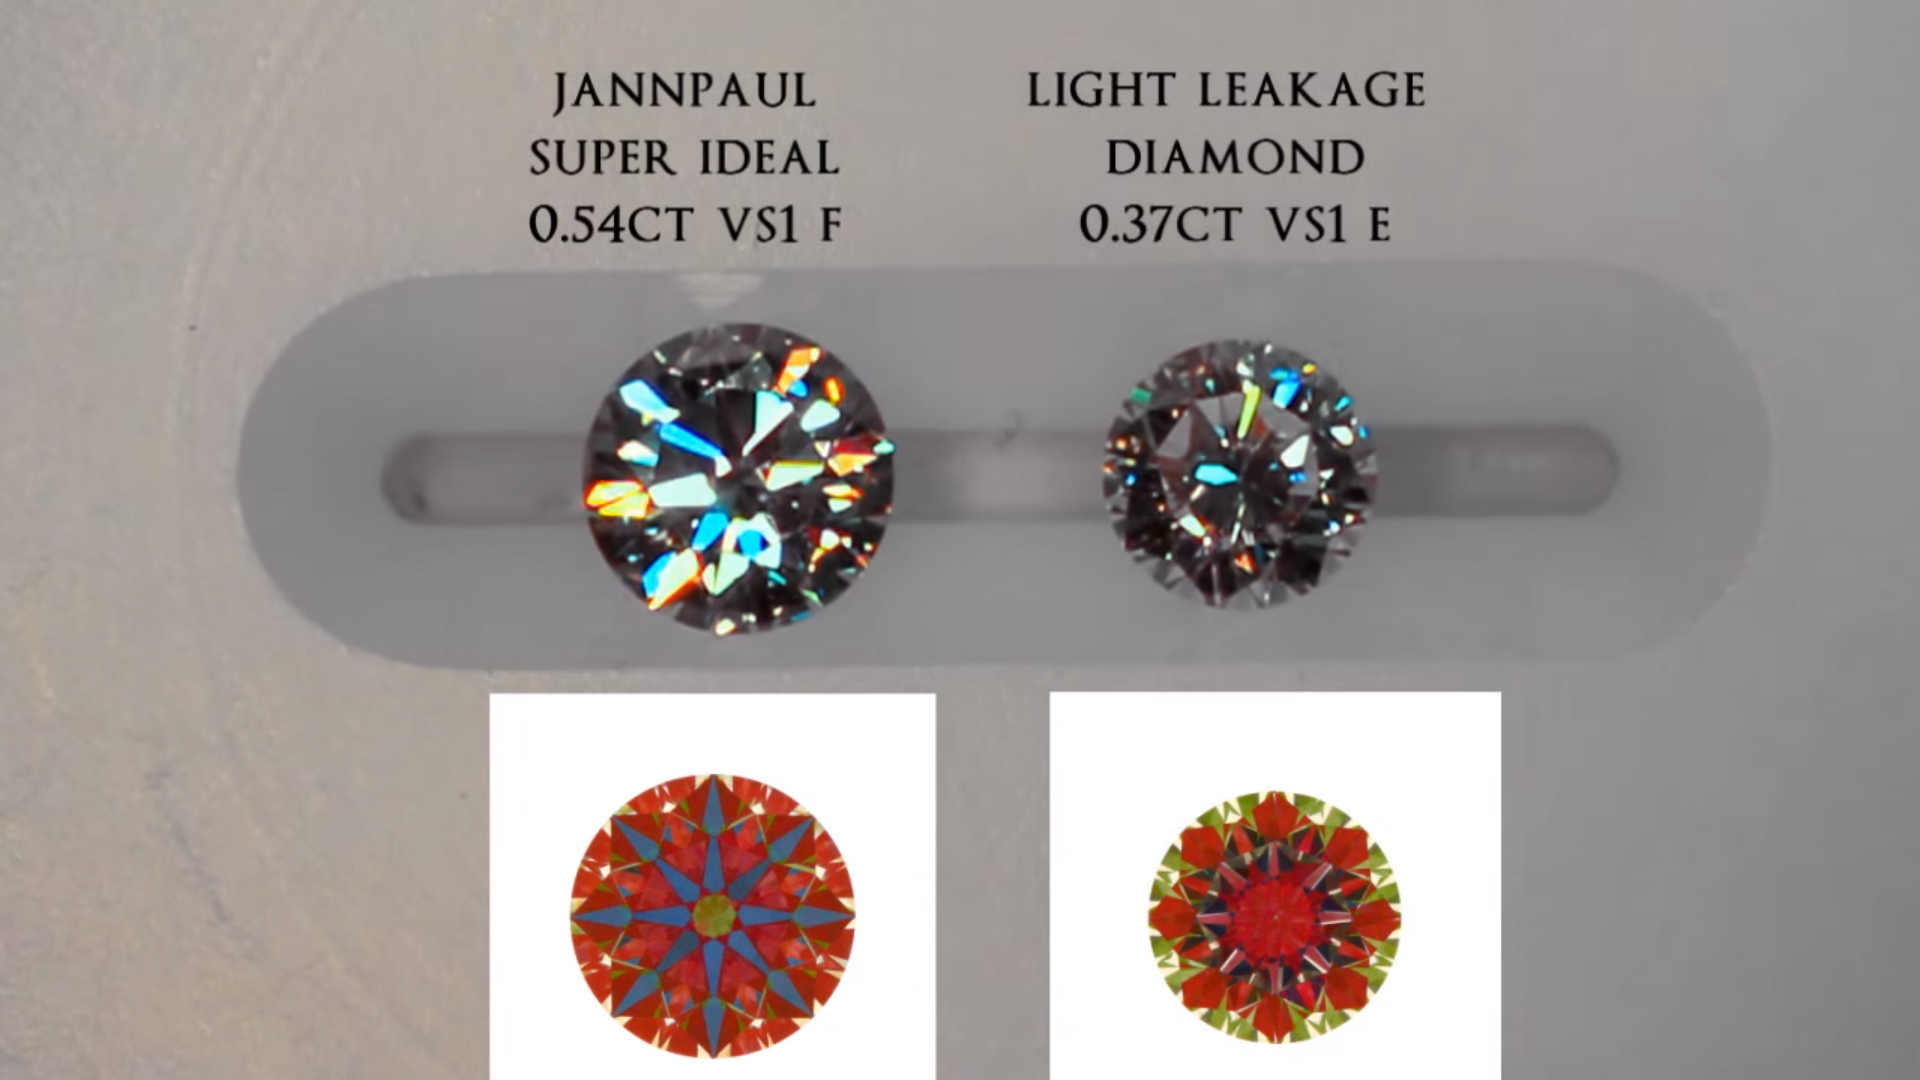 JannPaul Education: Light Leakage in a 0.3carat Diamond 